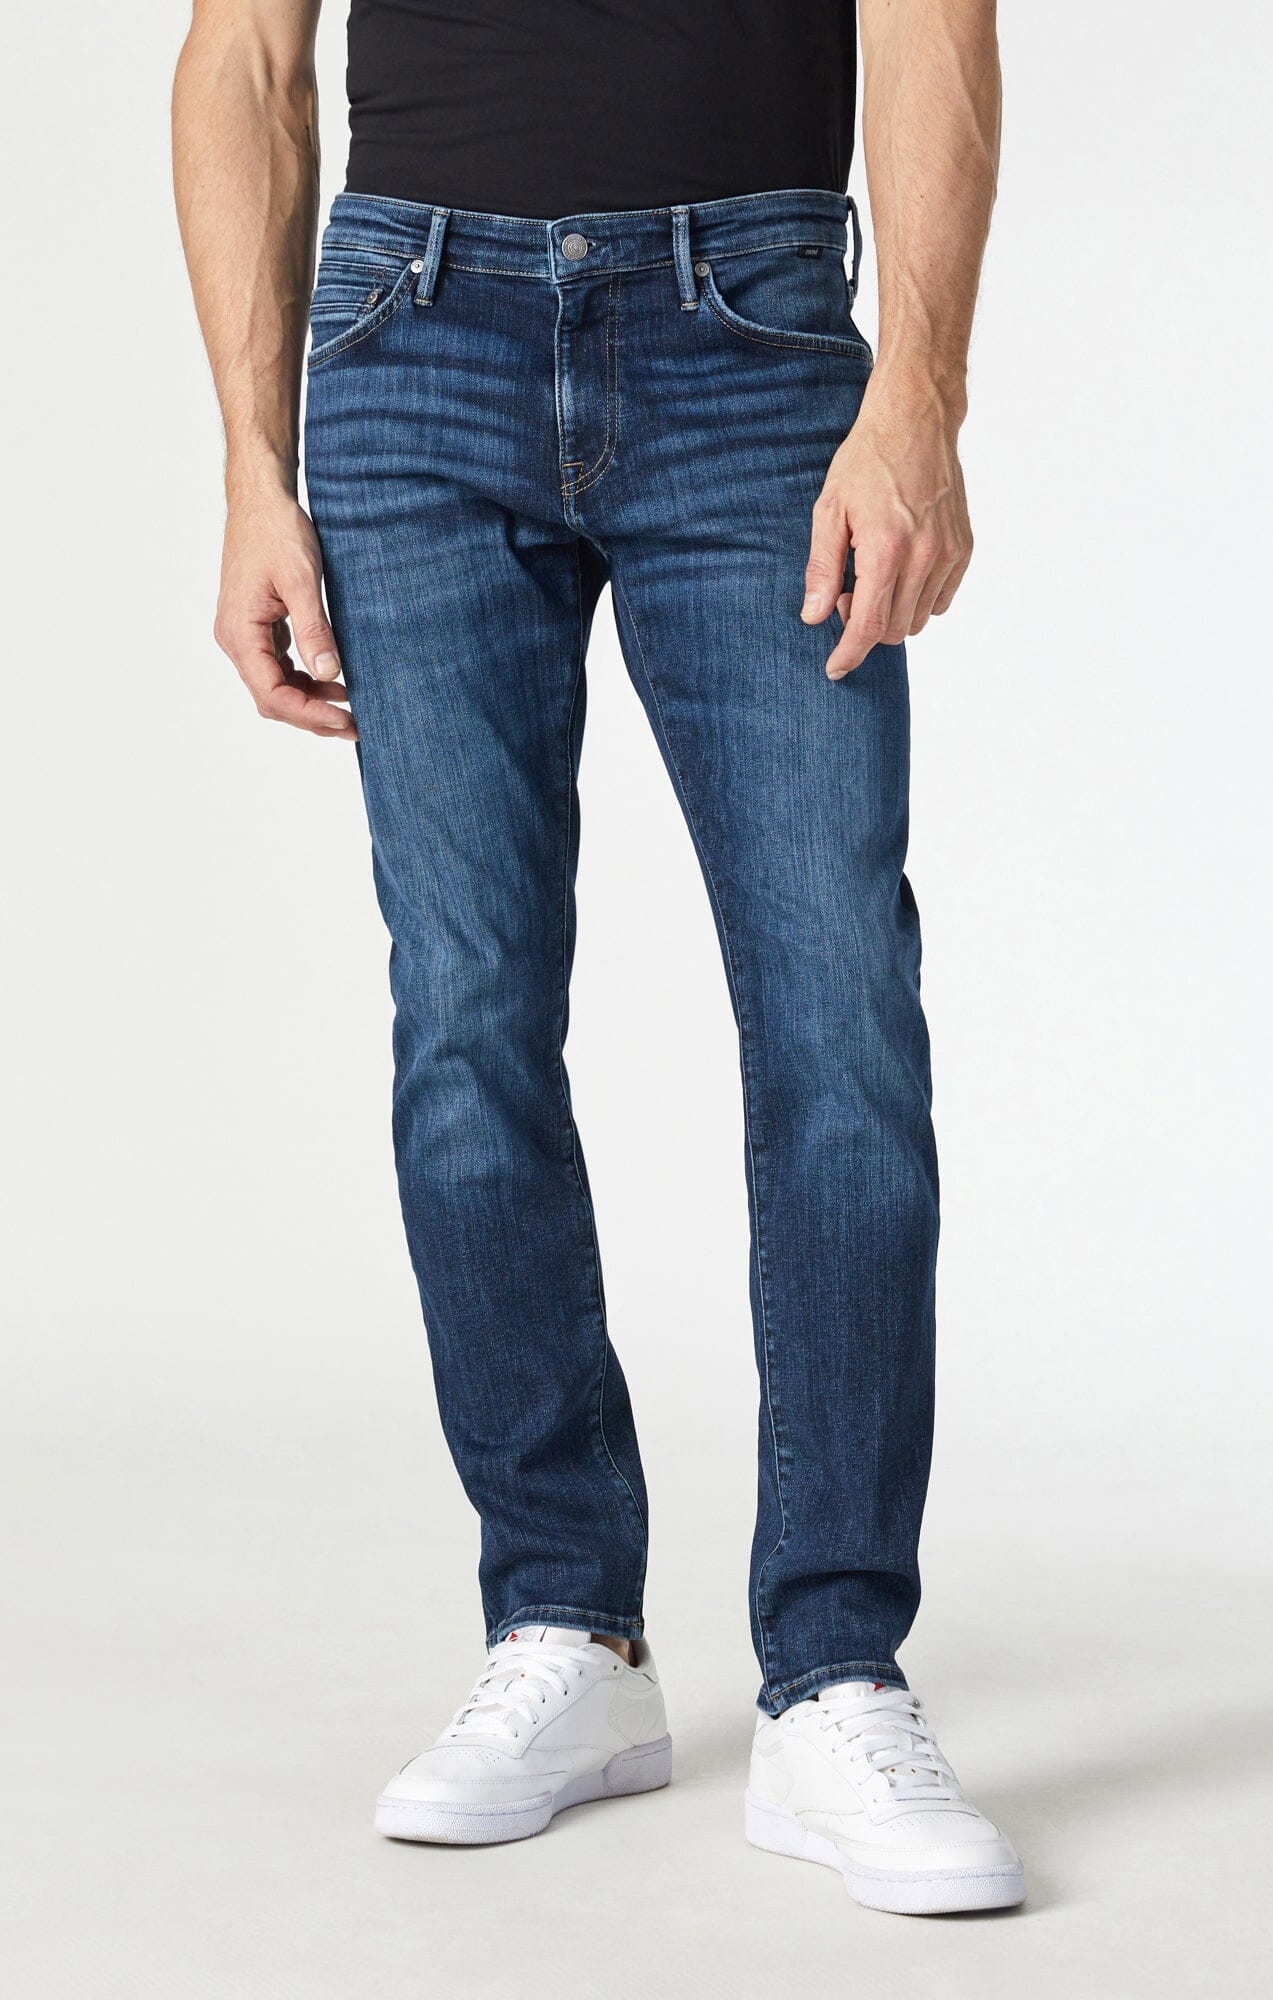 Mavi Jeans  Sustainably Made Denim & Apparel